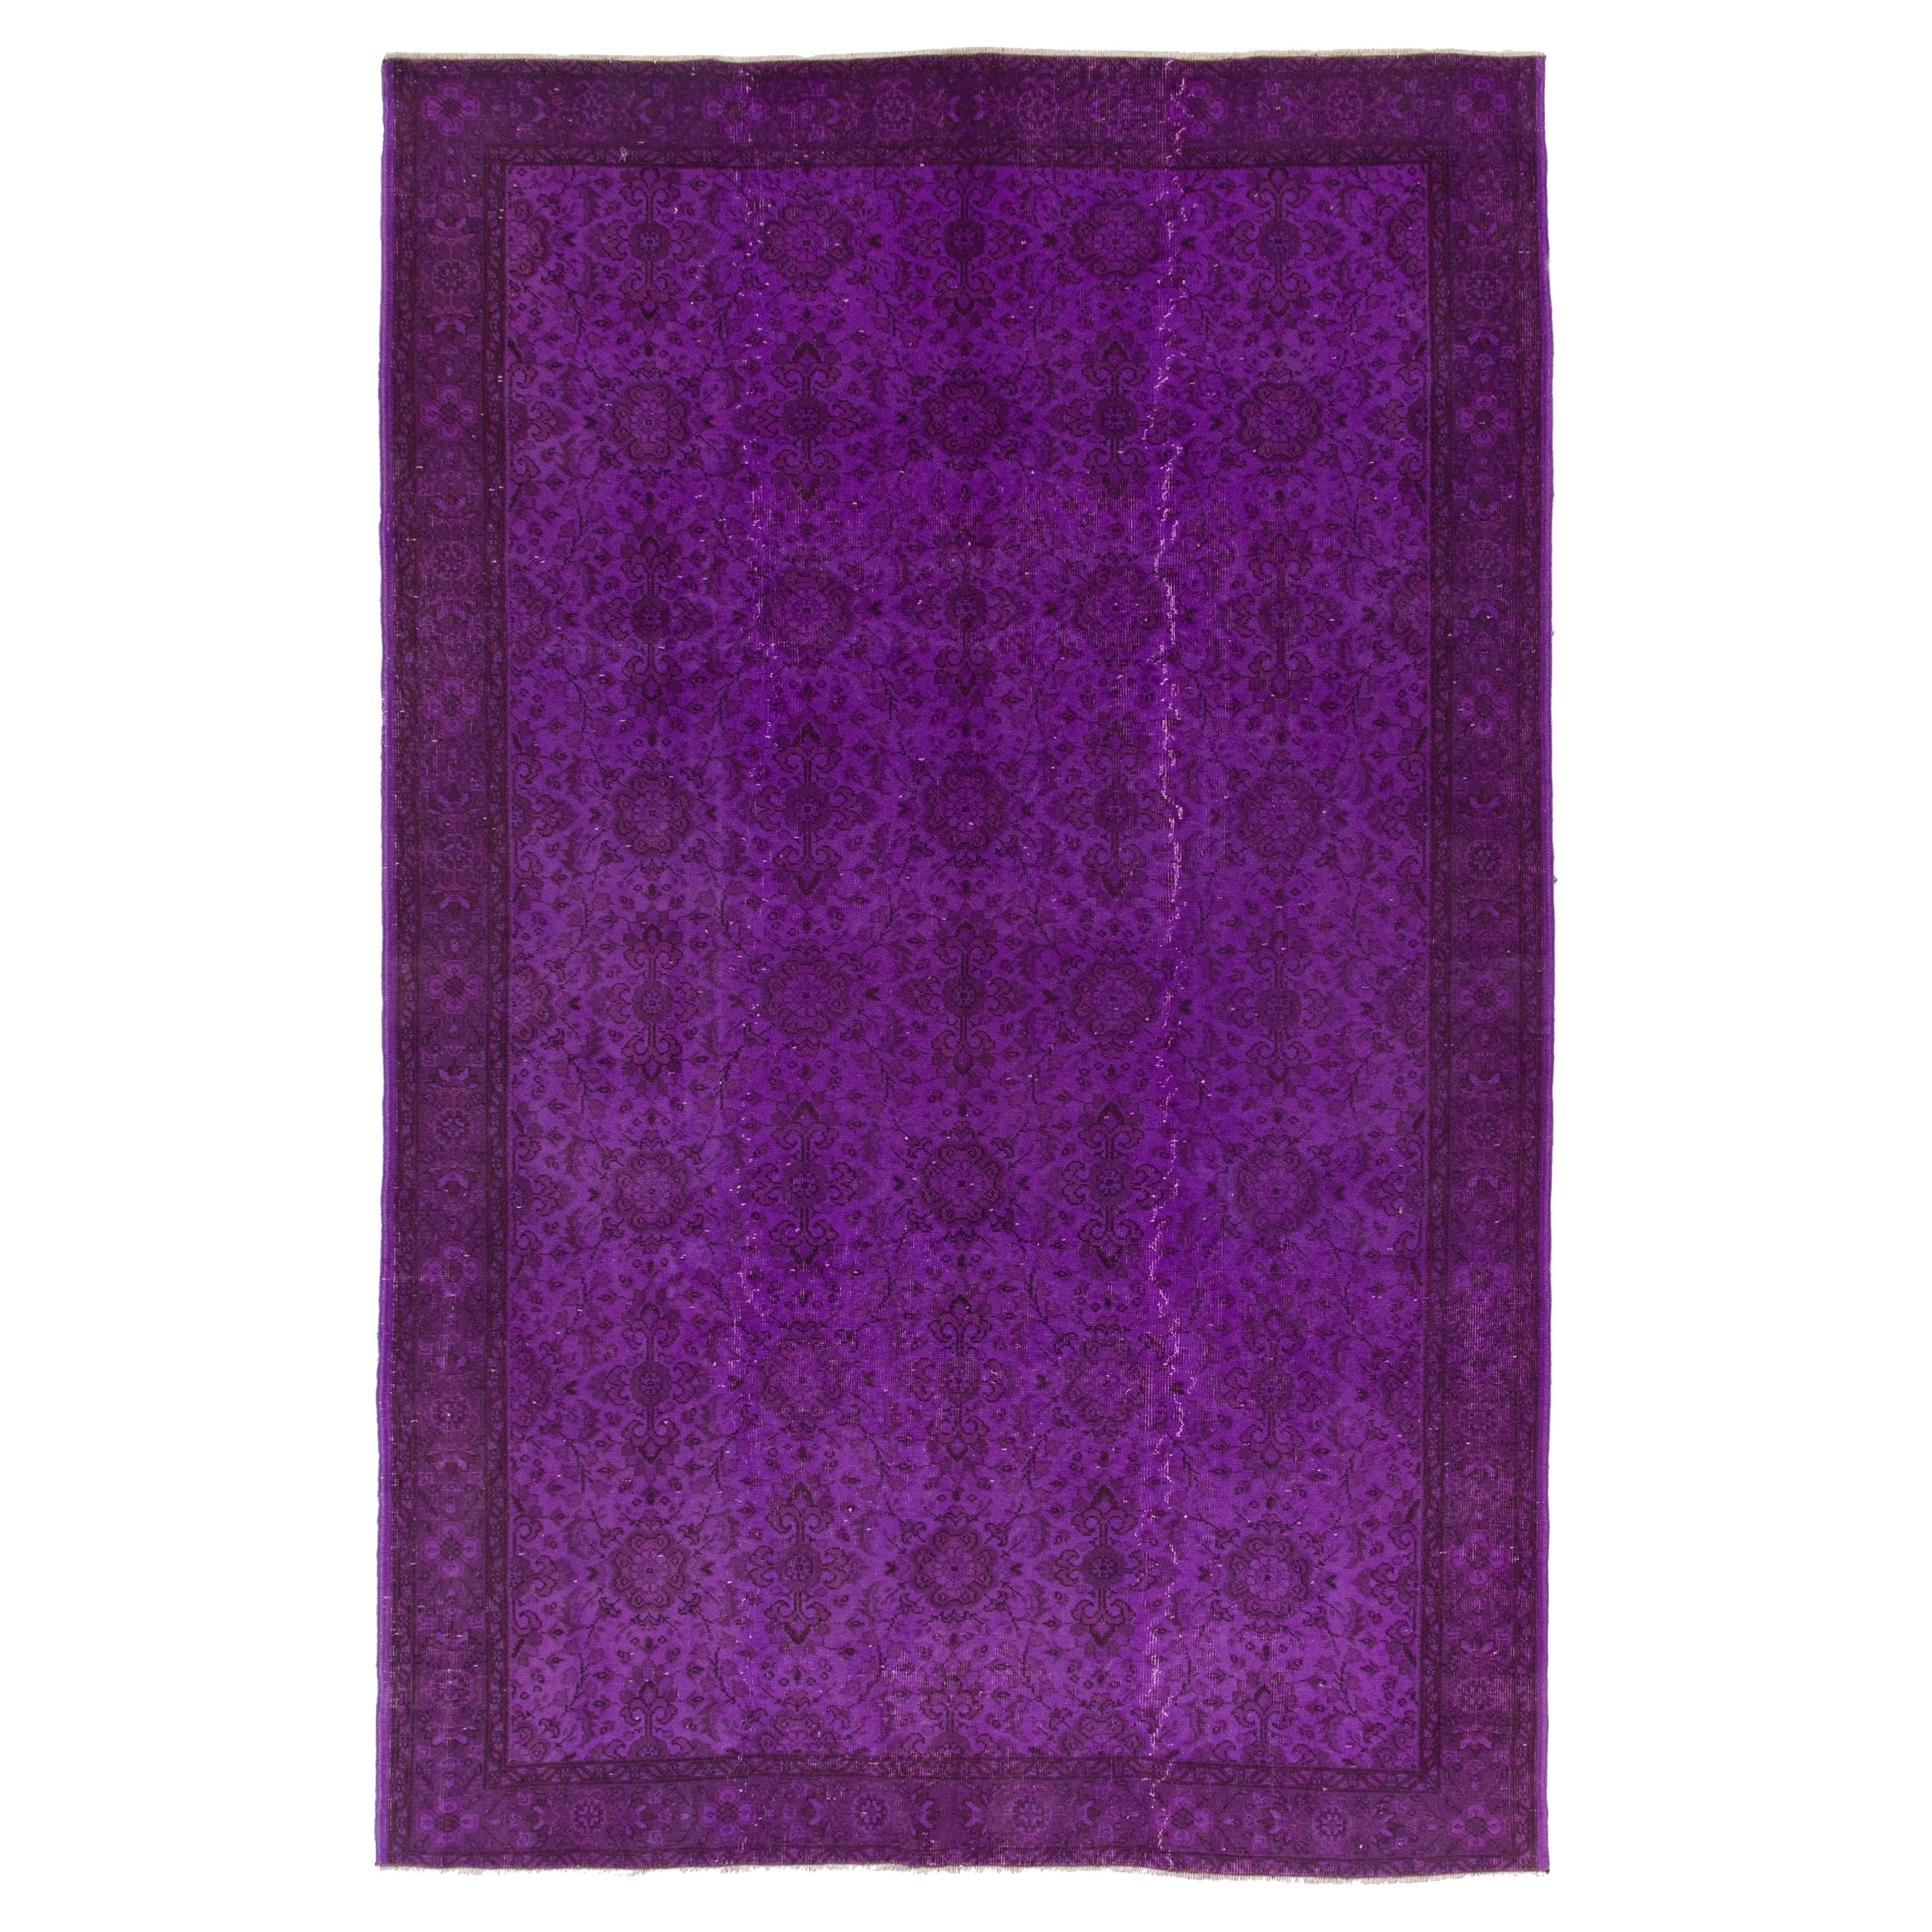 6.7x10.2 Ft Modern Turkish Area Rug in Purple, Floral Patterned Handmade Carpet (tapis fait main à motifs floraux)